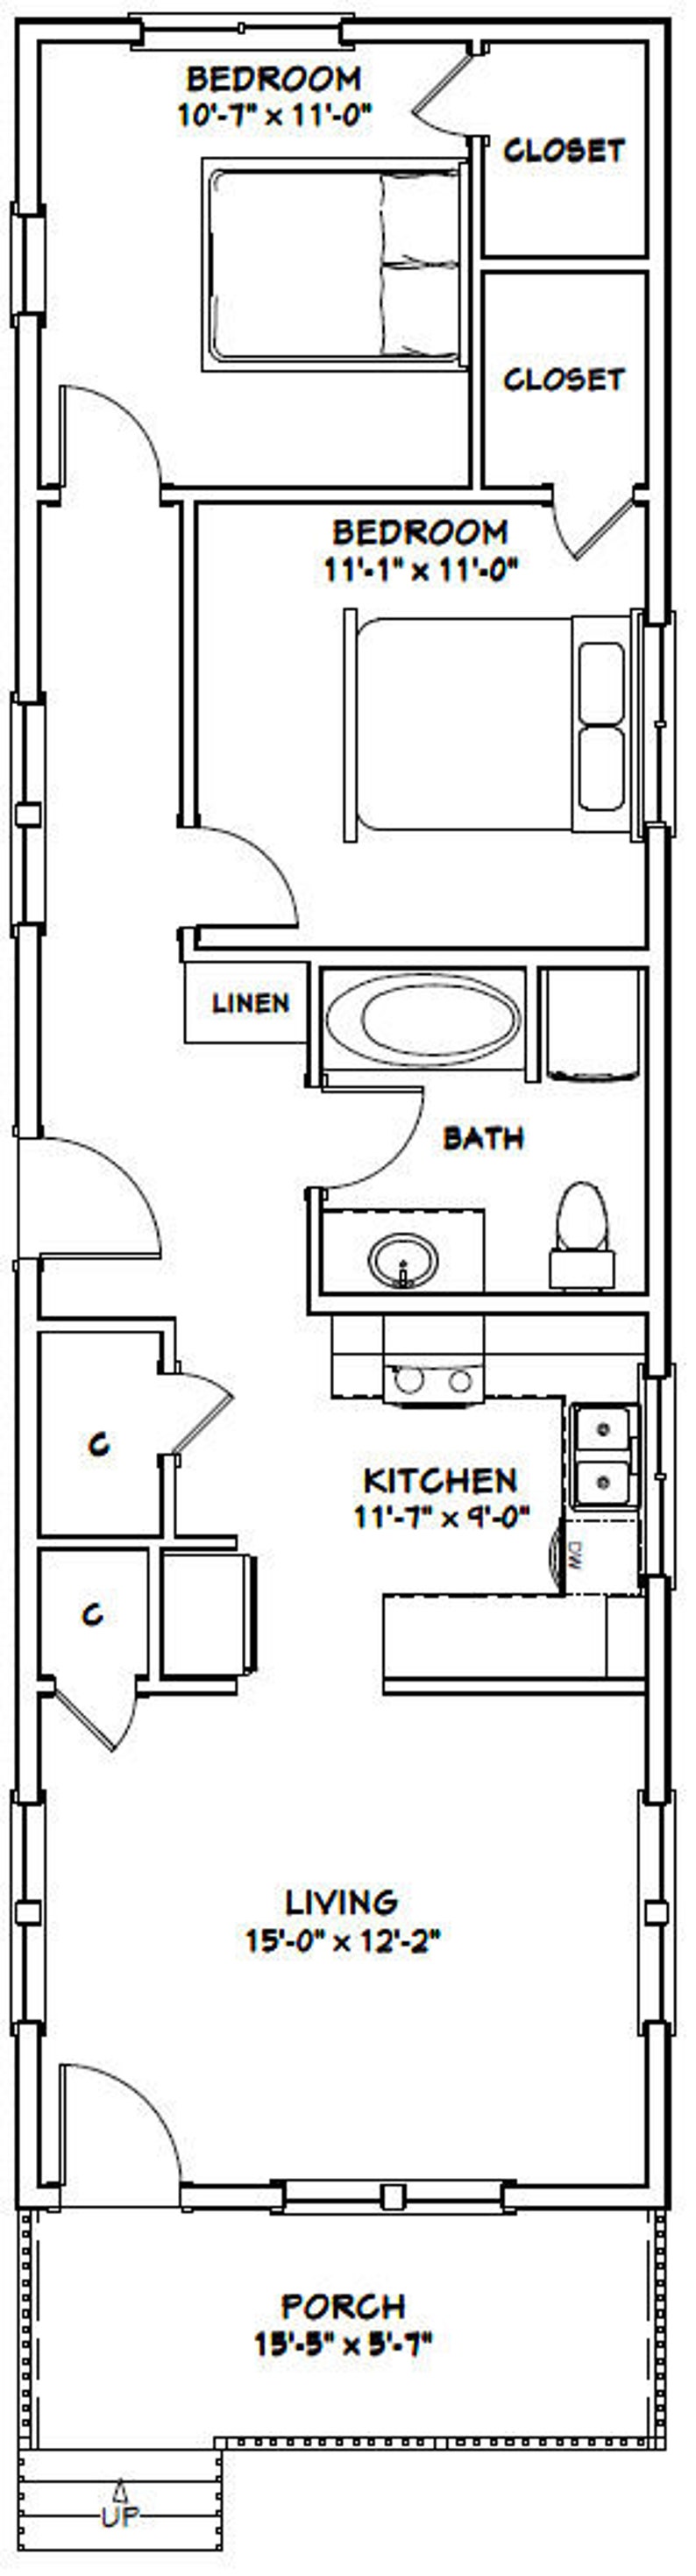 16x54 House 2Bedroom 1Bath 864 sq ft PDF Floor Plan Etsy